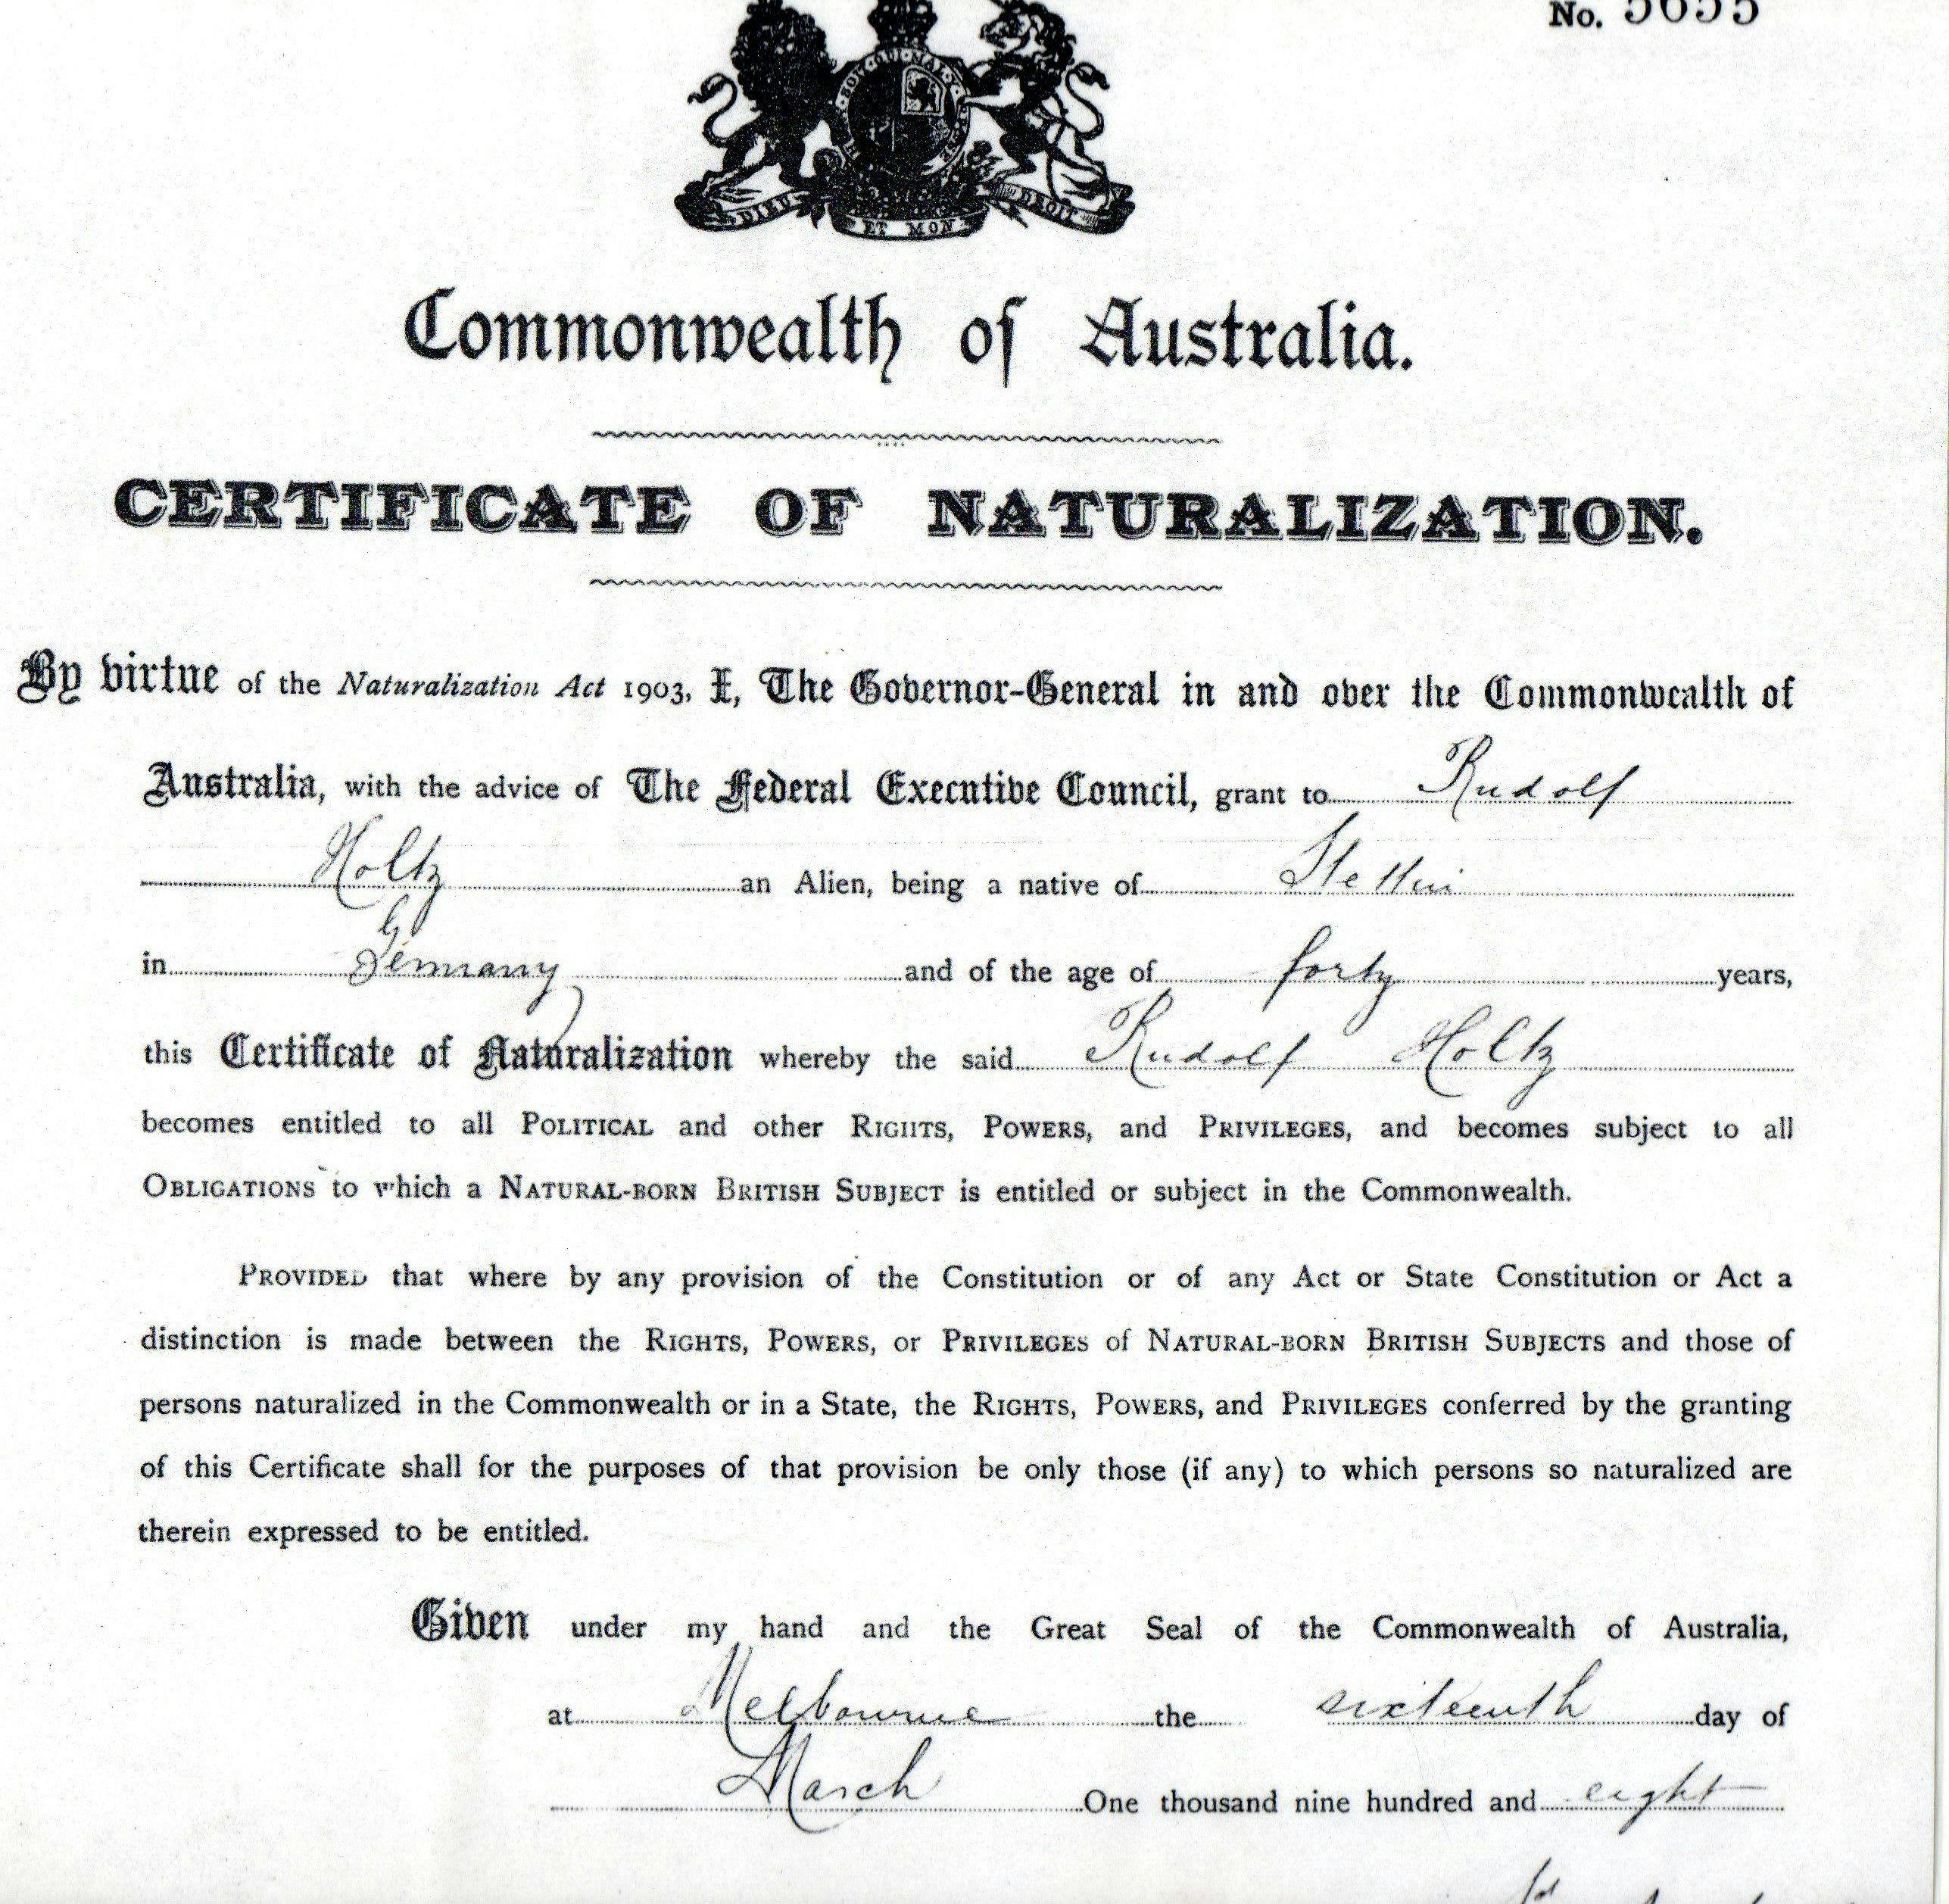 Extract of Rudolf Holtz's Certificate of Naturalisation